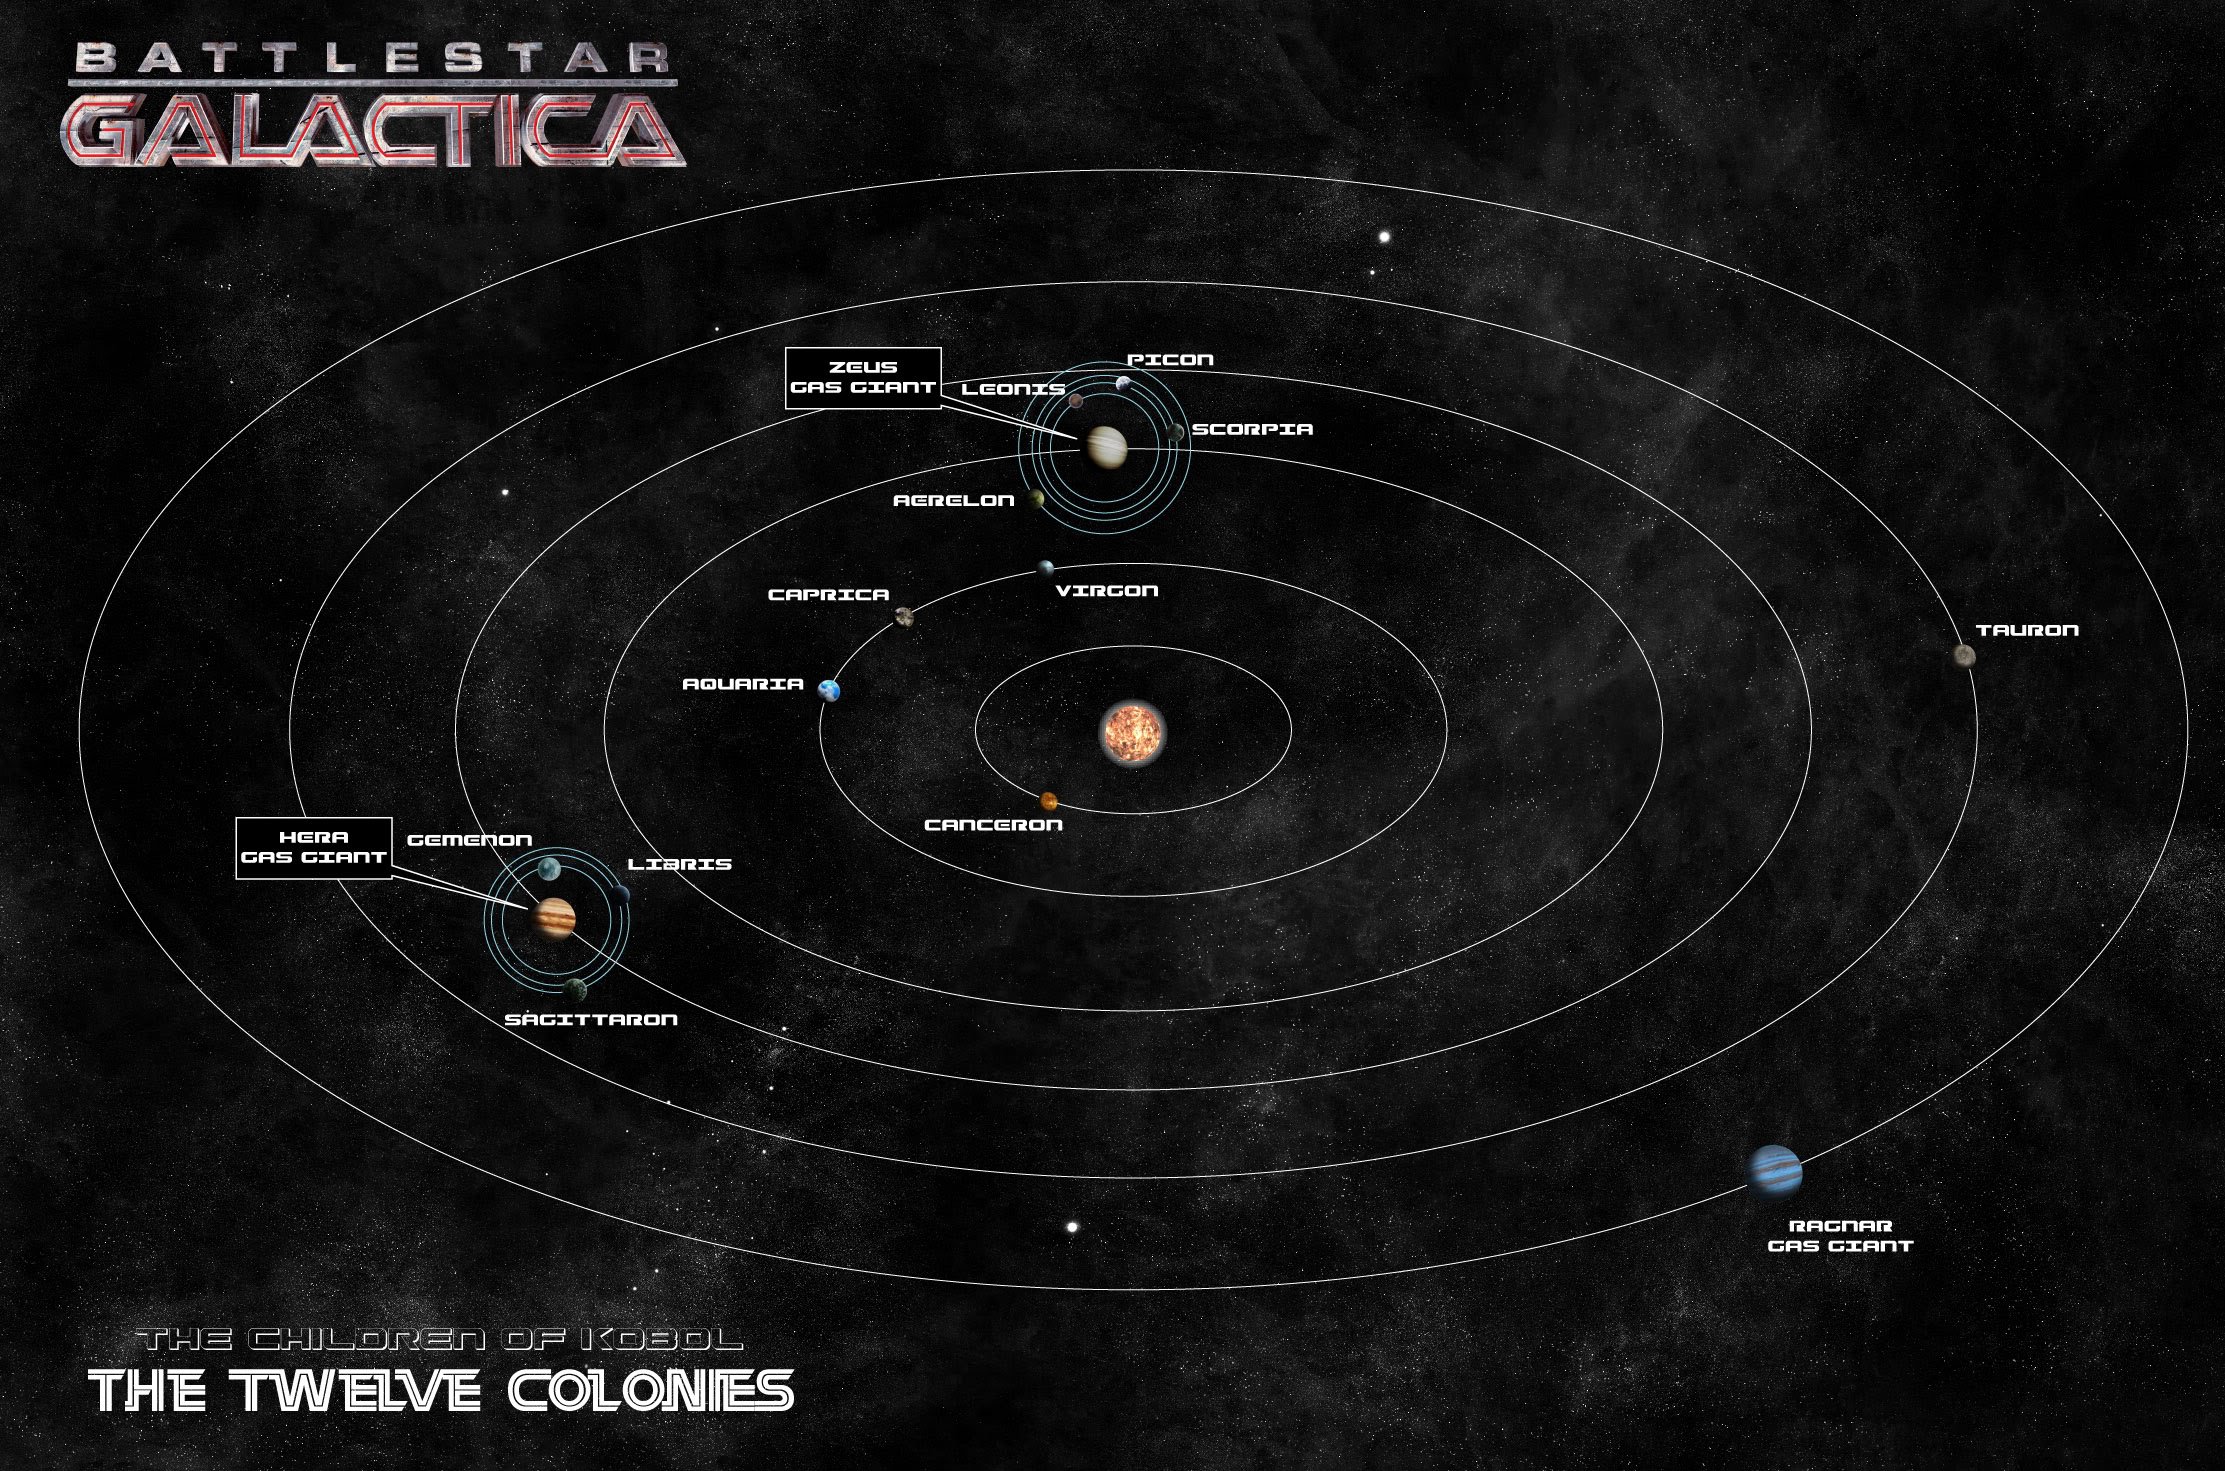 Battlestar Galactica Action Adventure Drama Sci Fi Map Poster